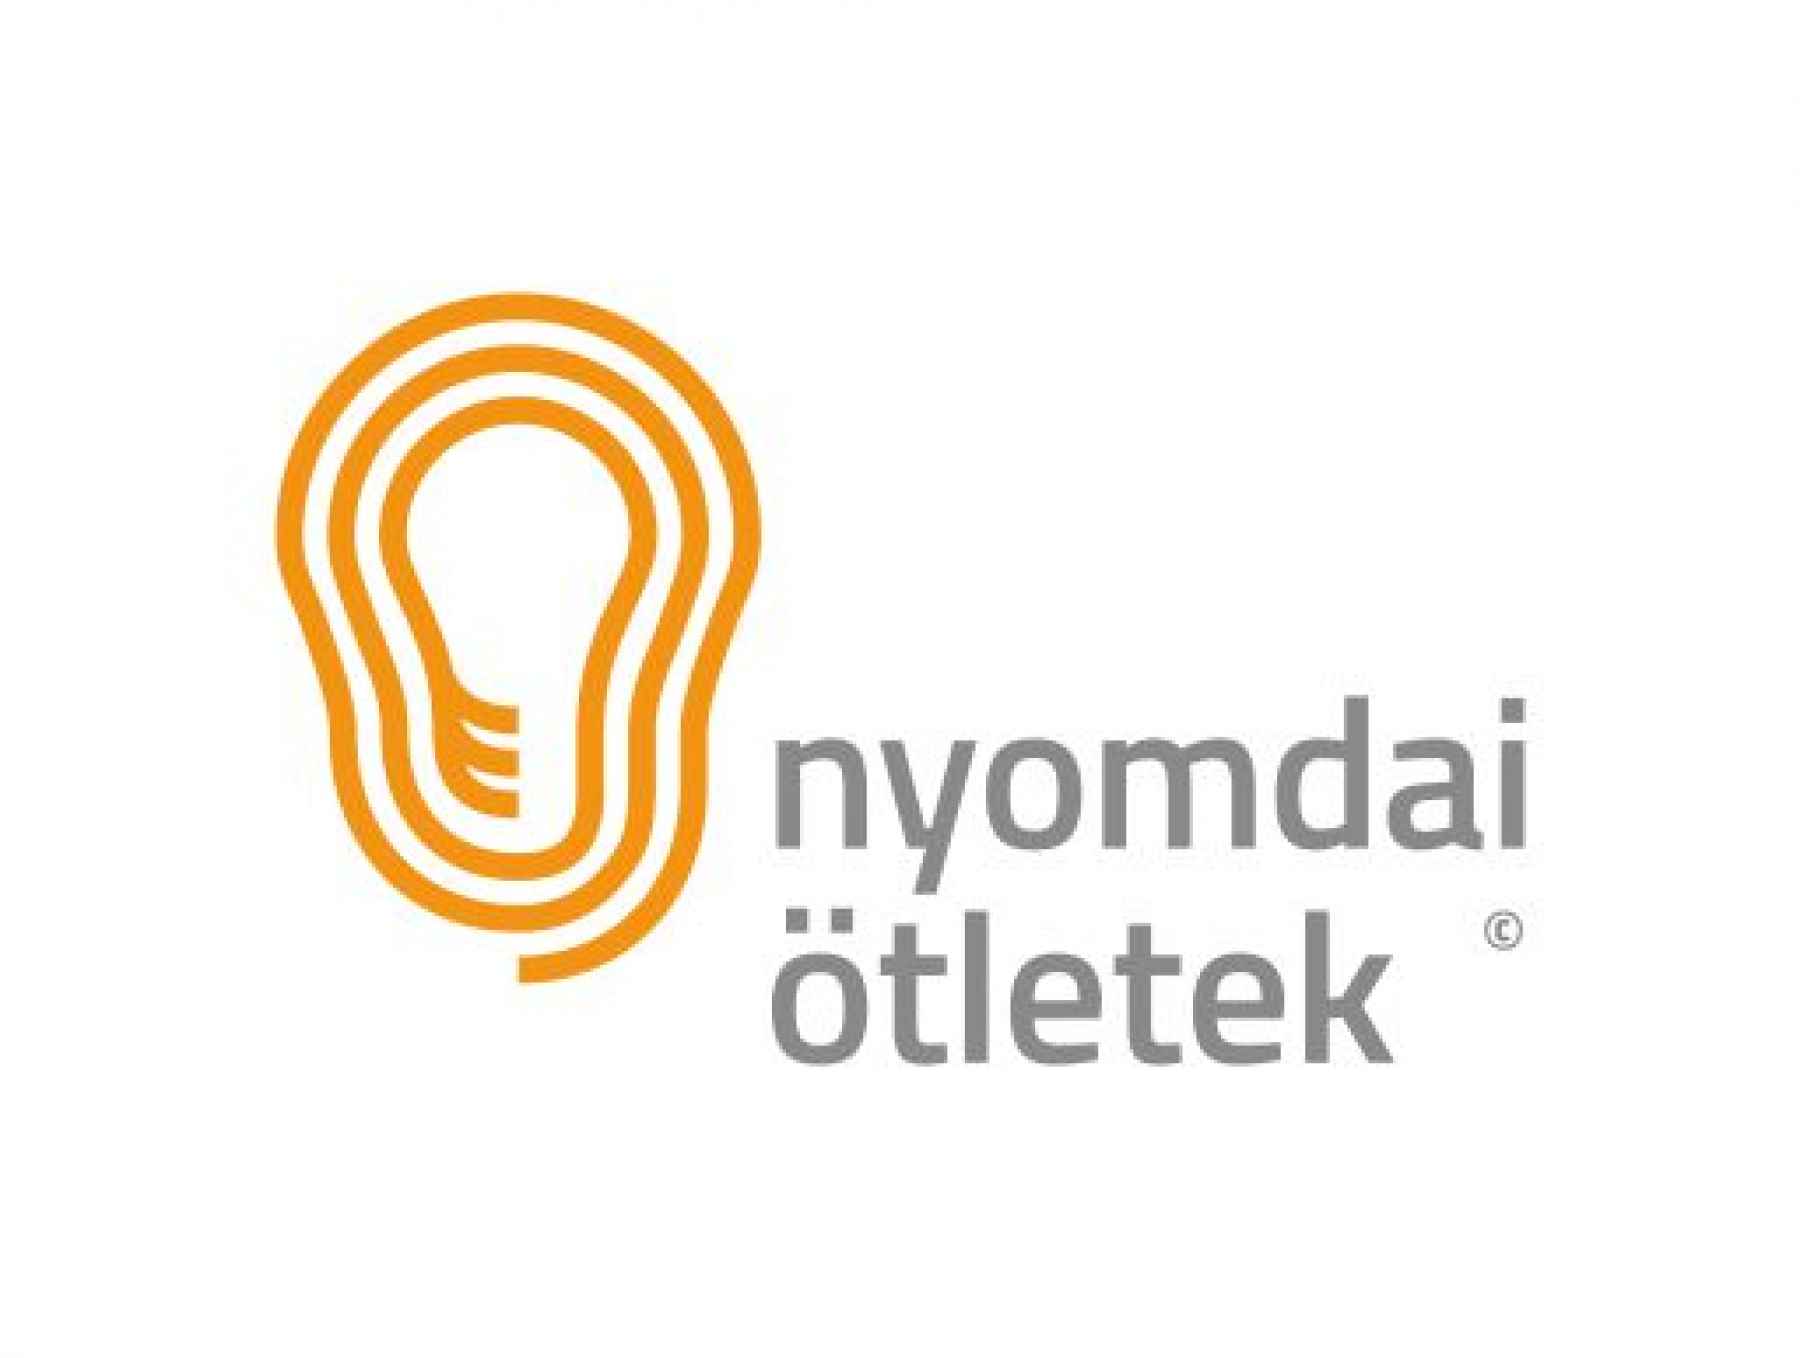 Nyomdai ötletek Kft. logója